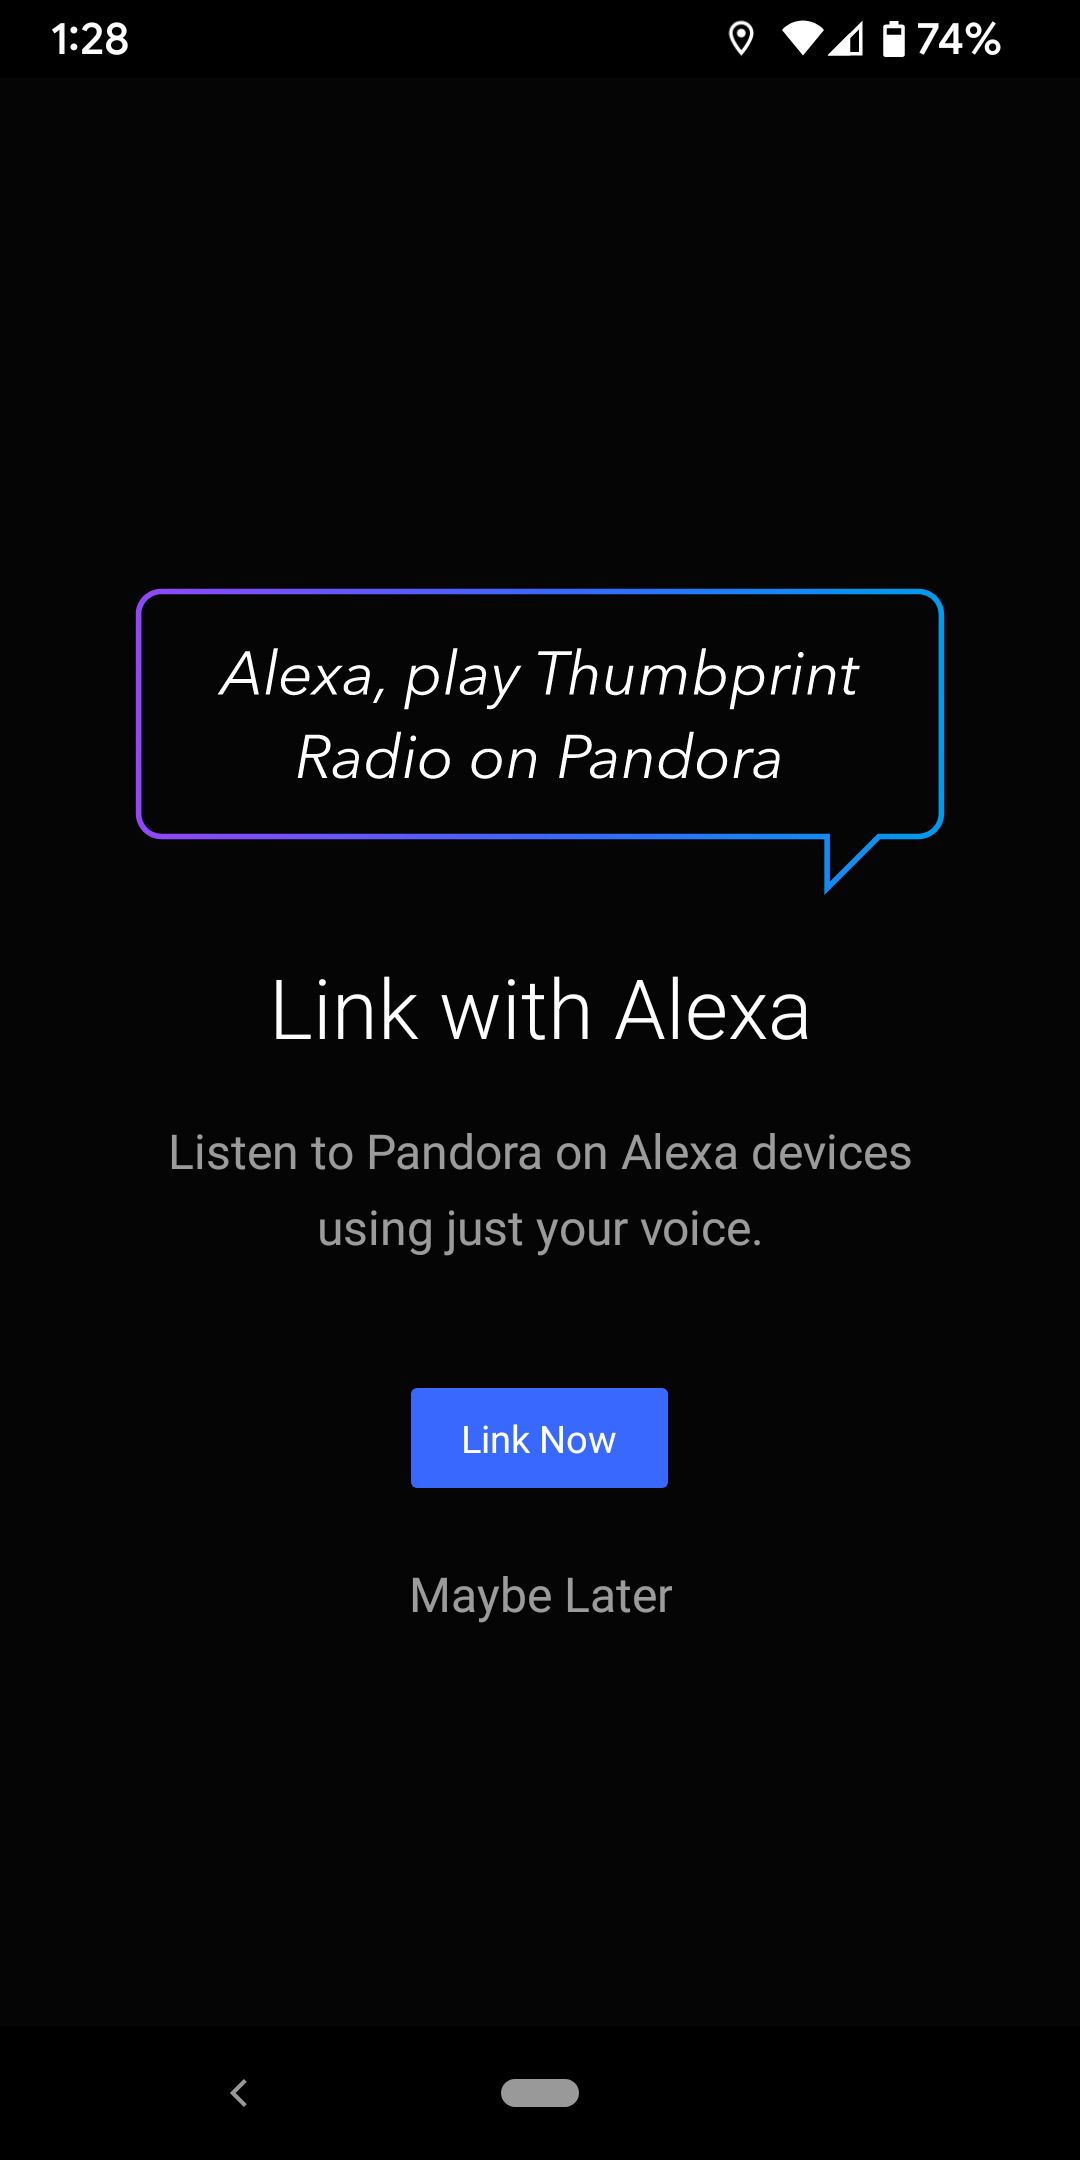 Pandora app Link to Alexa screen